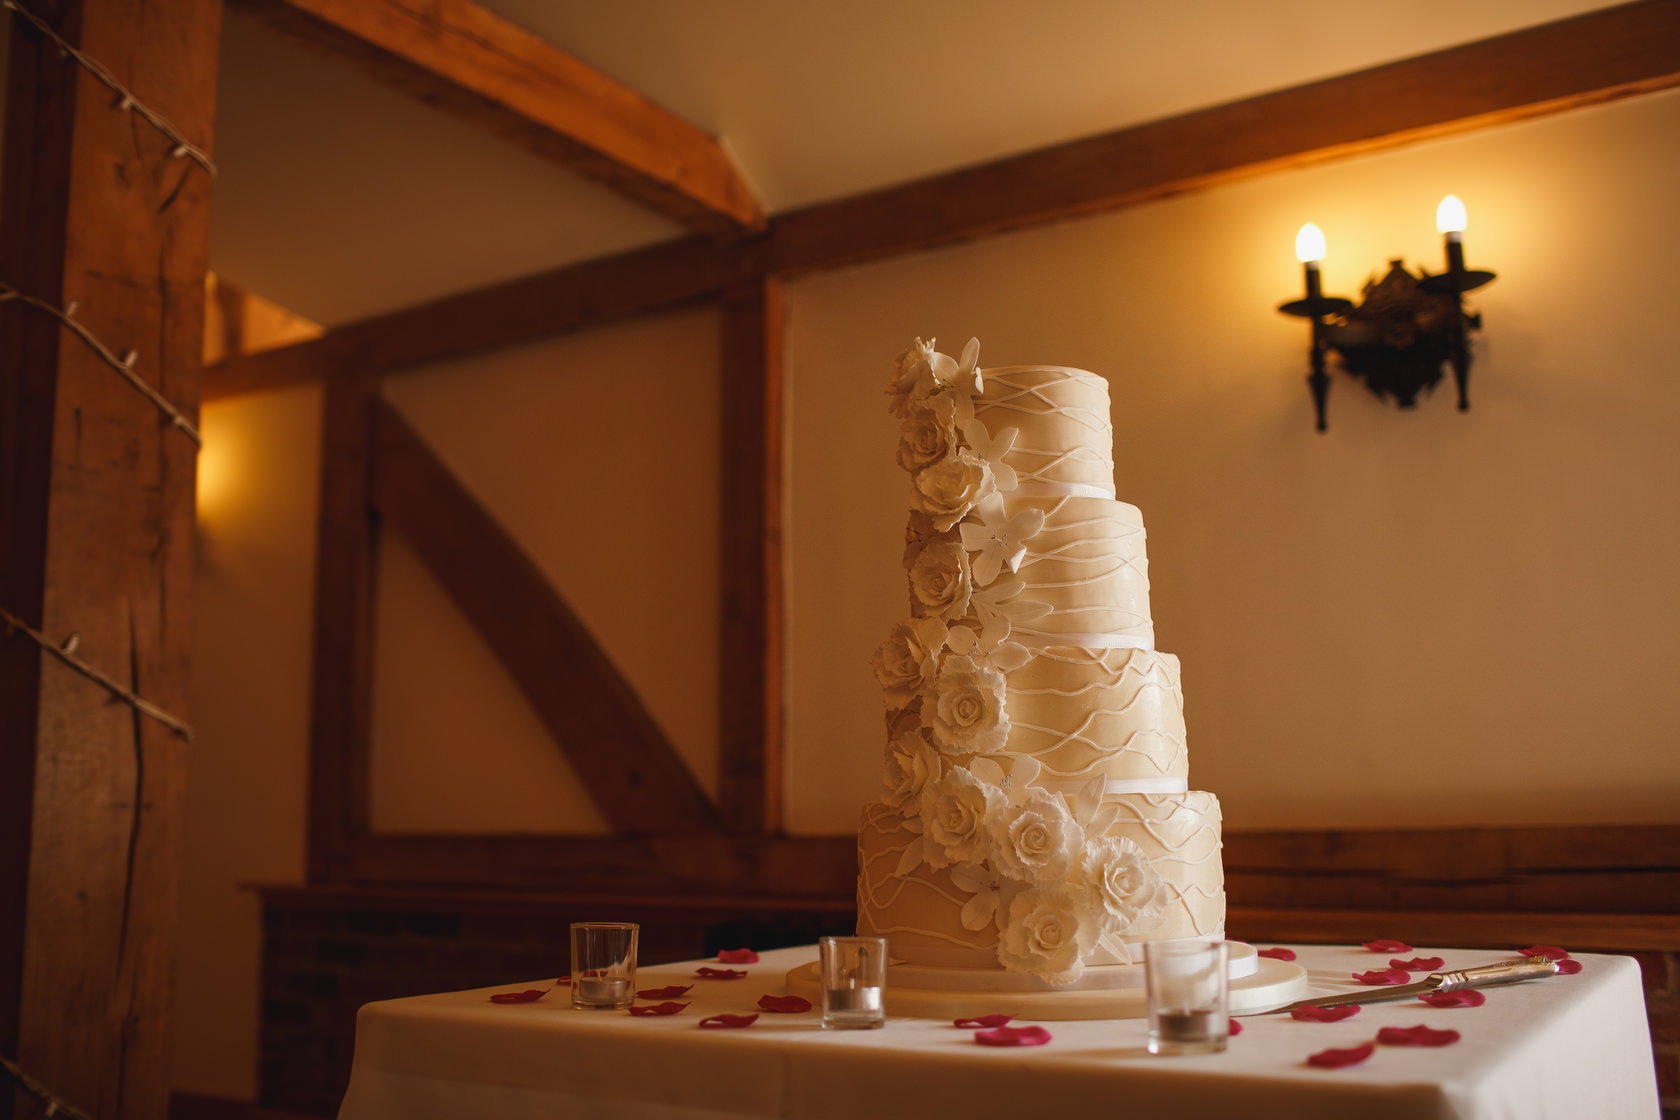 Wedding photographers sandhole oak barn - arj photography